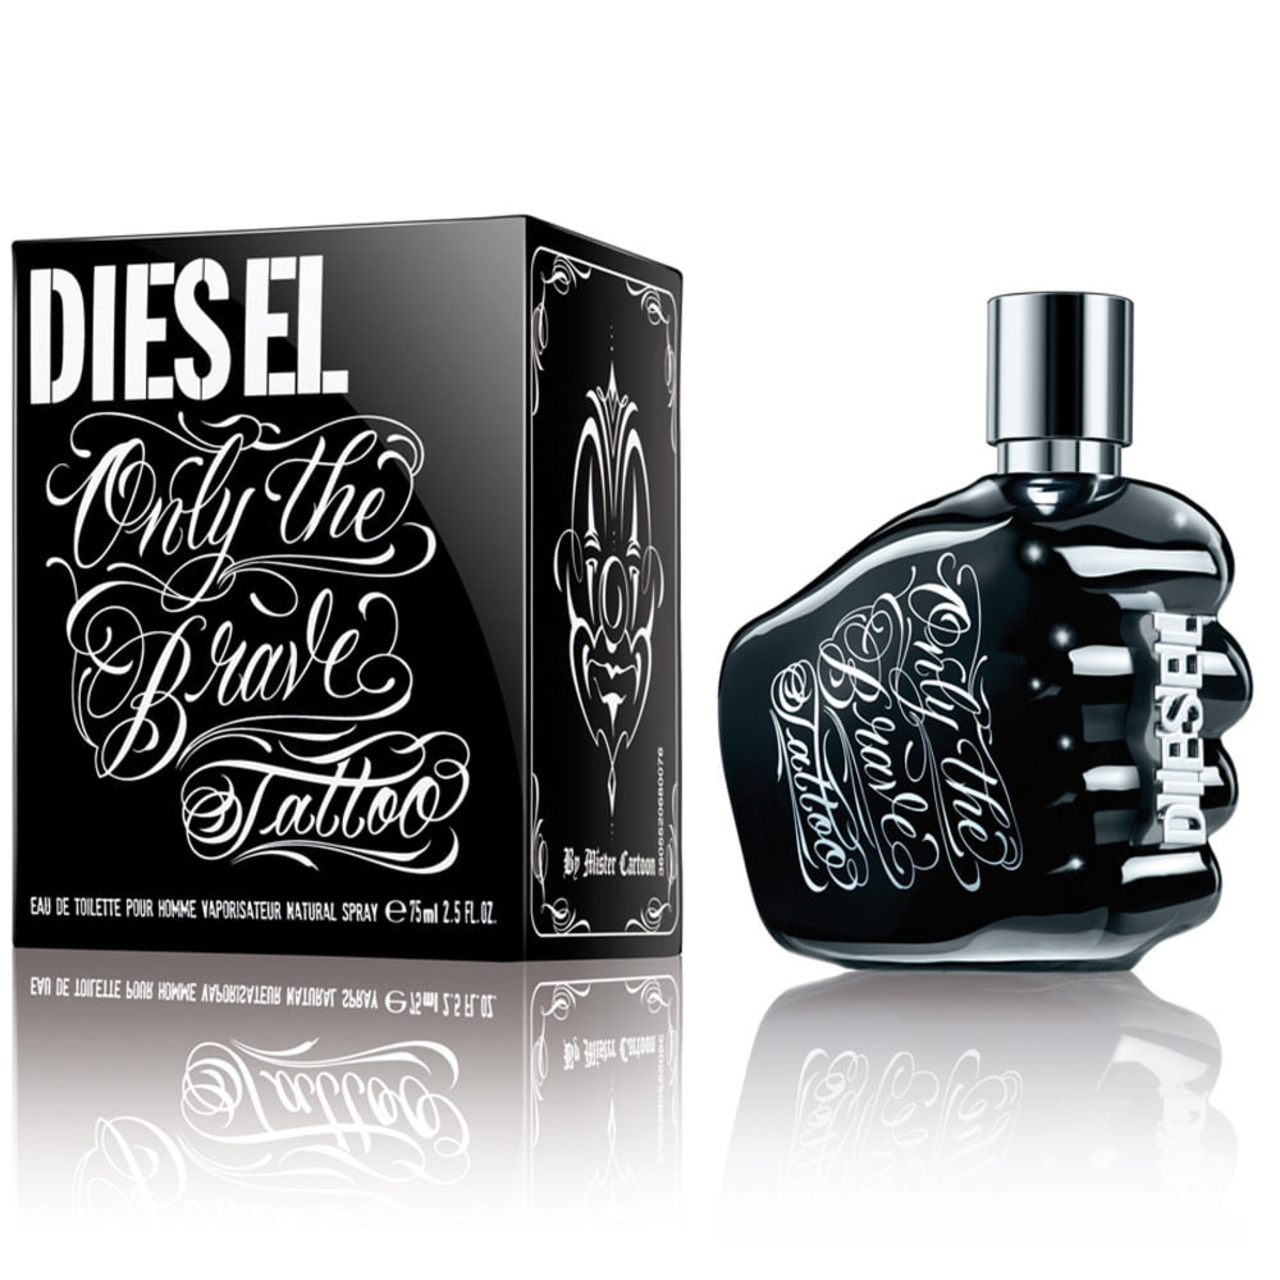 Perfume Diesel Only The Brave Tattoo Eau De Toilette | ZZ MALL